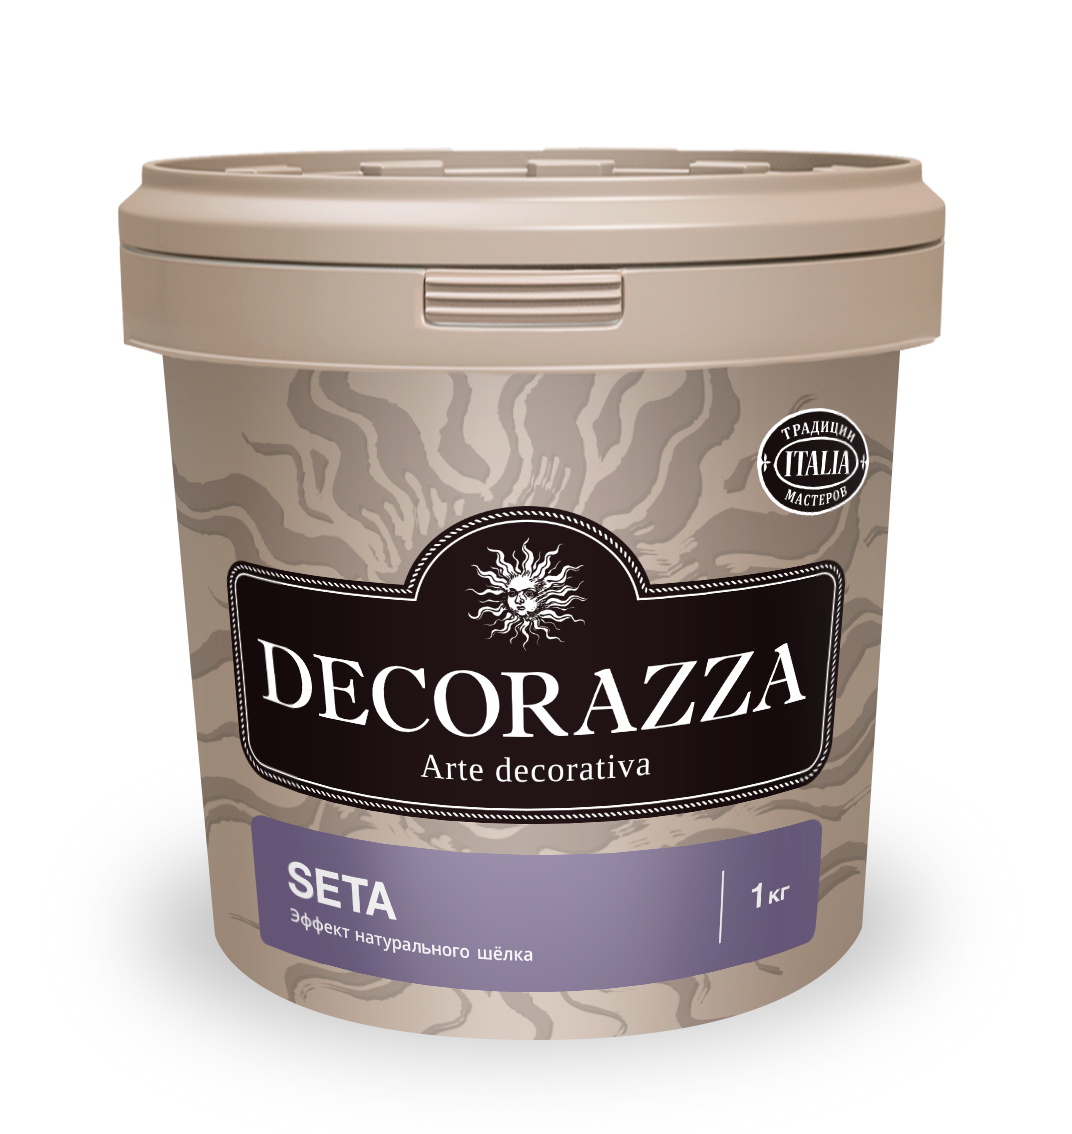 Декоративная штукатурка эффект натурального шелка Decorazza Seta, ST 800, золото, 1 кг декоративная штукатурка decorazza art beton ab 001 4 кг